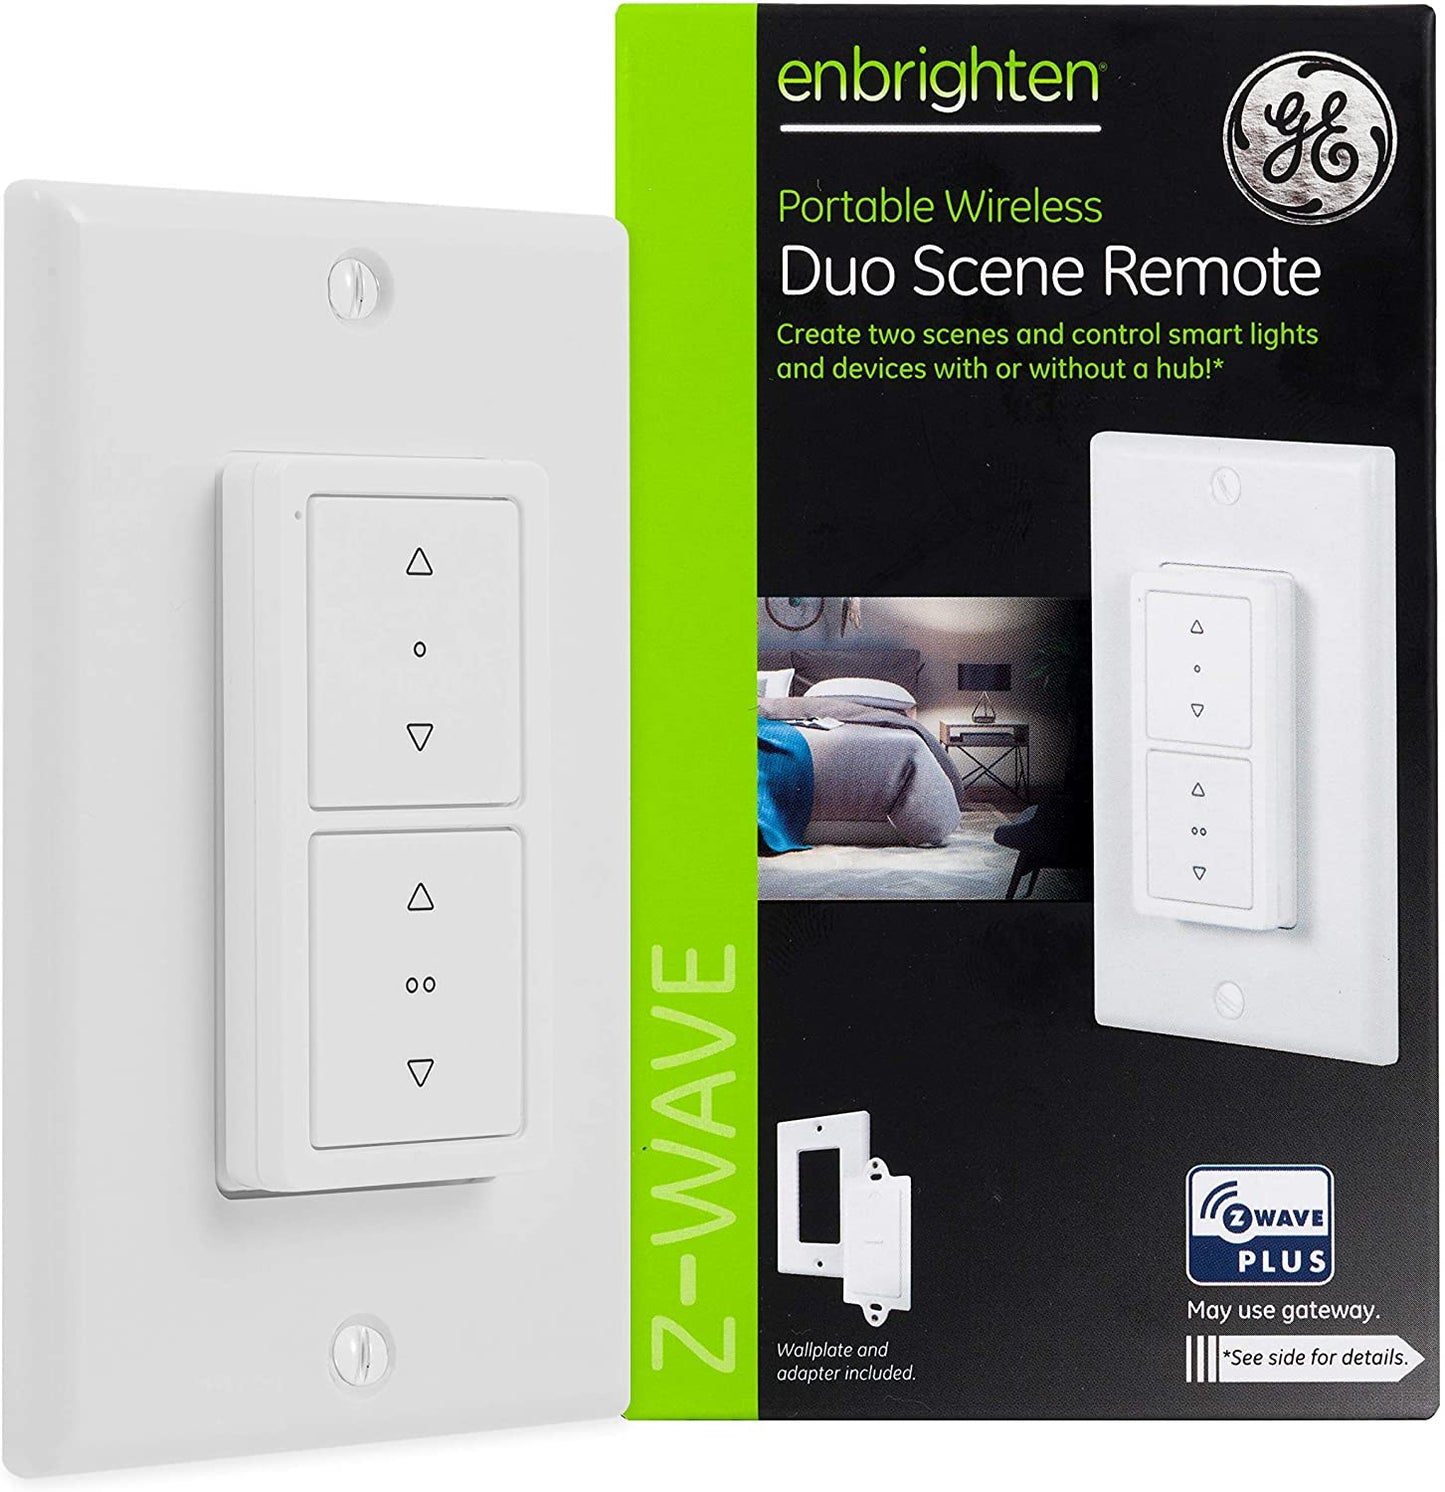 GE Enbrighten Z-Wave Plus In-Wall Portable Duo Scene Remote - 34174